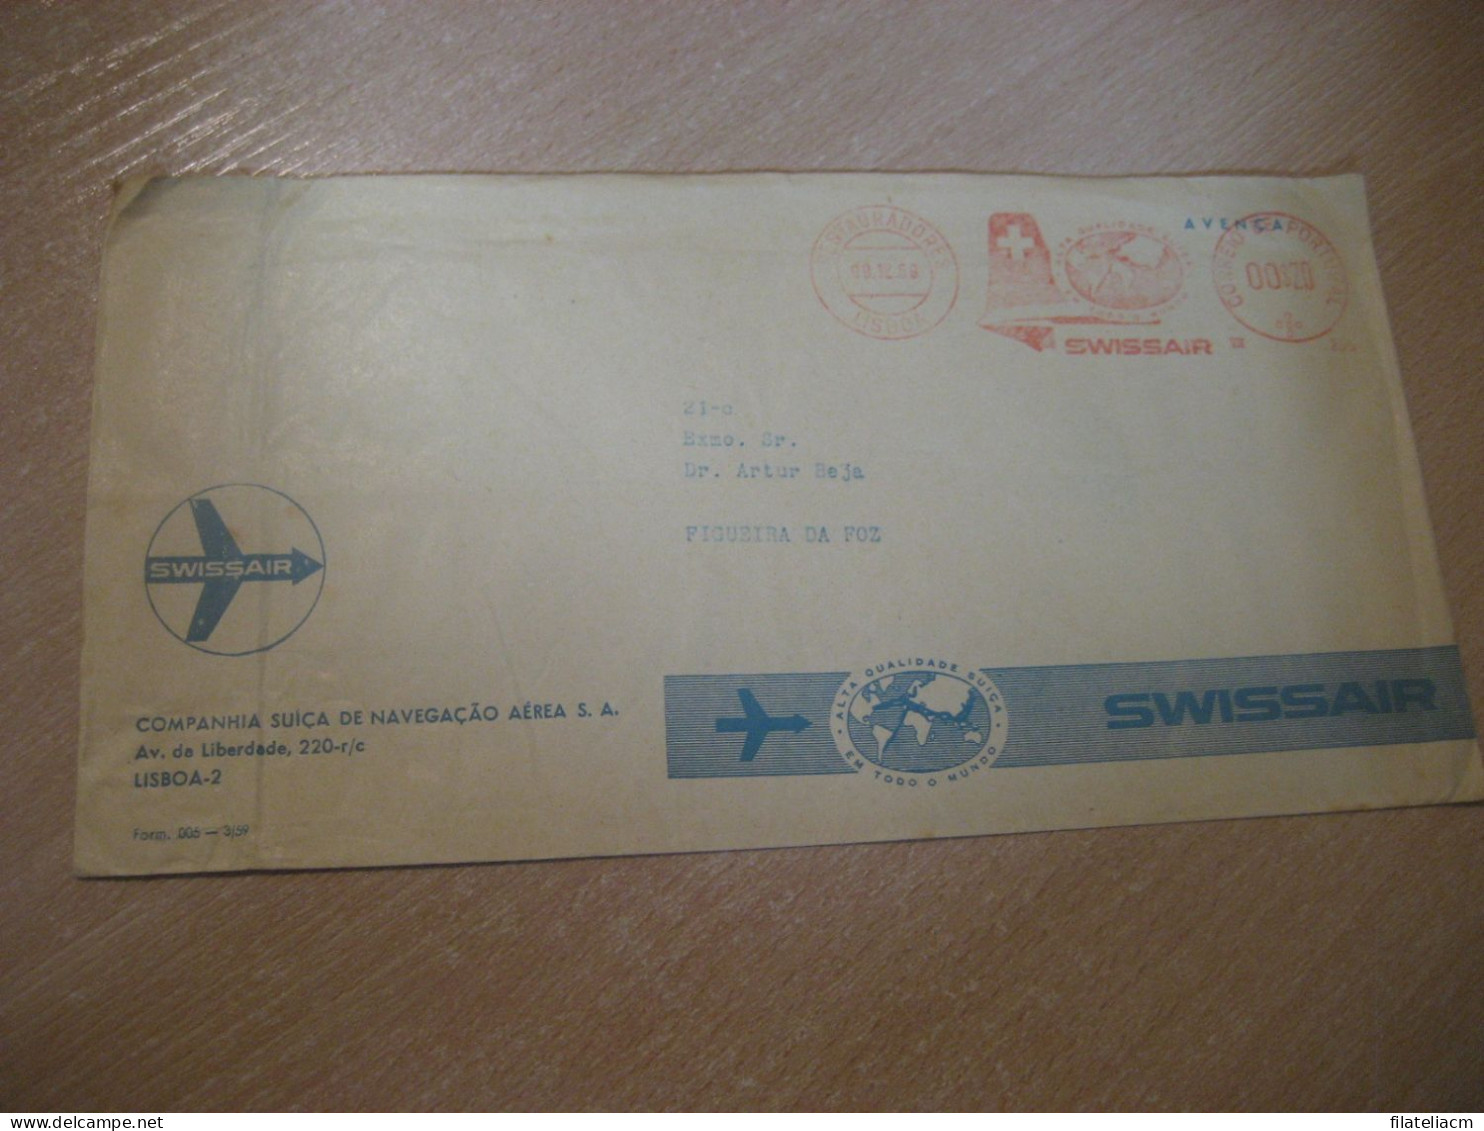 LISBOA 1959 To Figueira Da Foz SWISSAIR Airline Airlines Flight Meter Mail Cancel Cover PORTUGAL - Briefe U. Dokumente